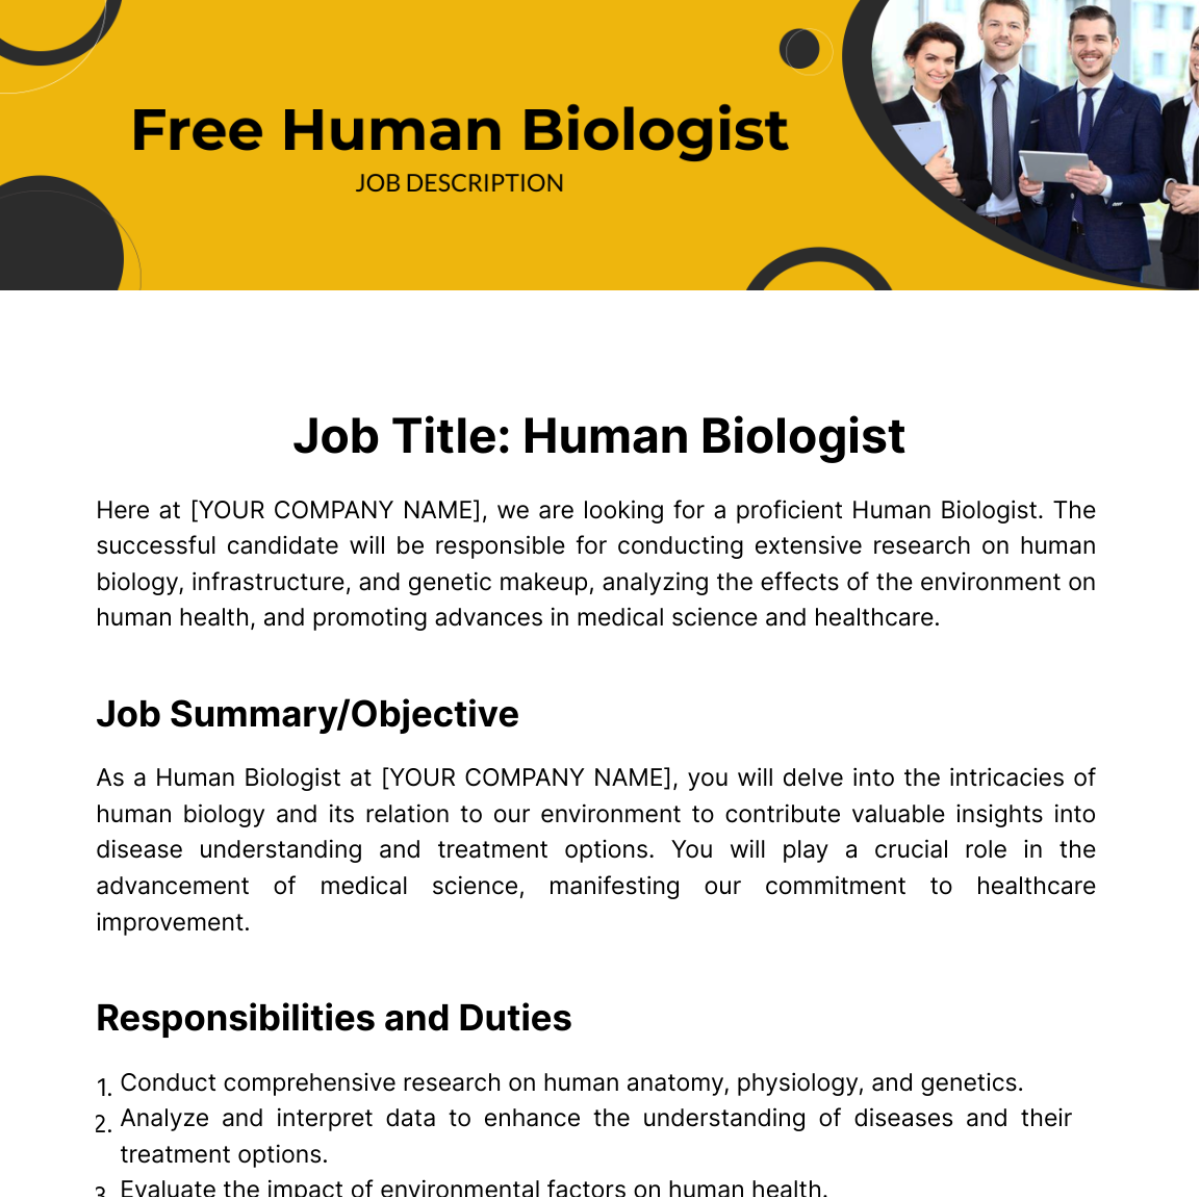 Free Human Biologist Job Description Template